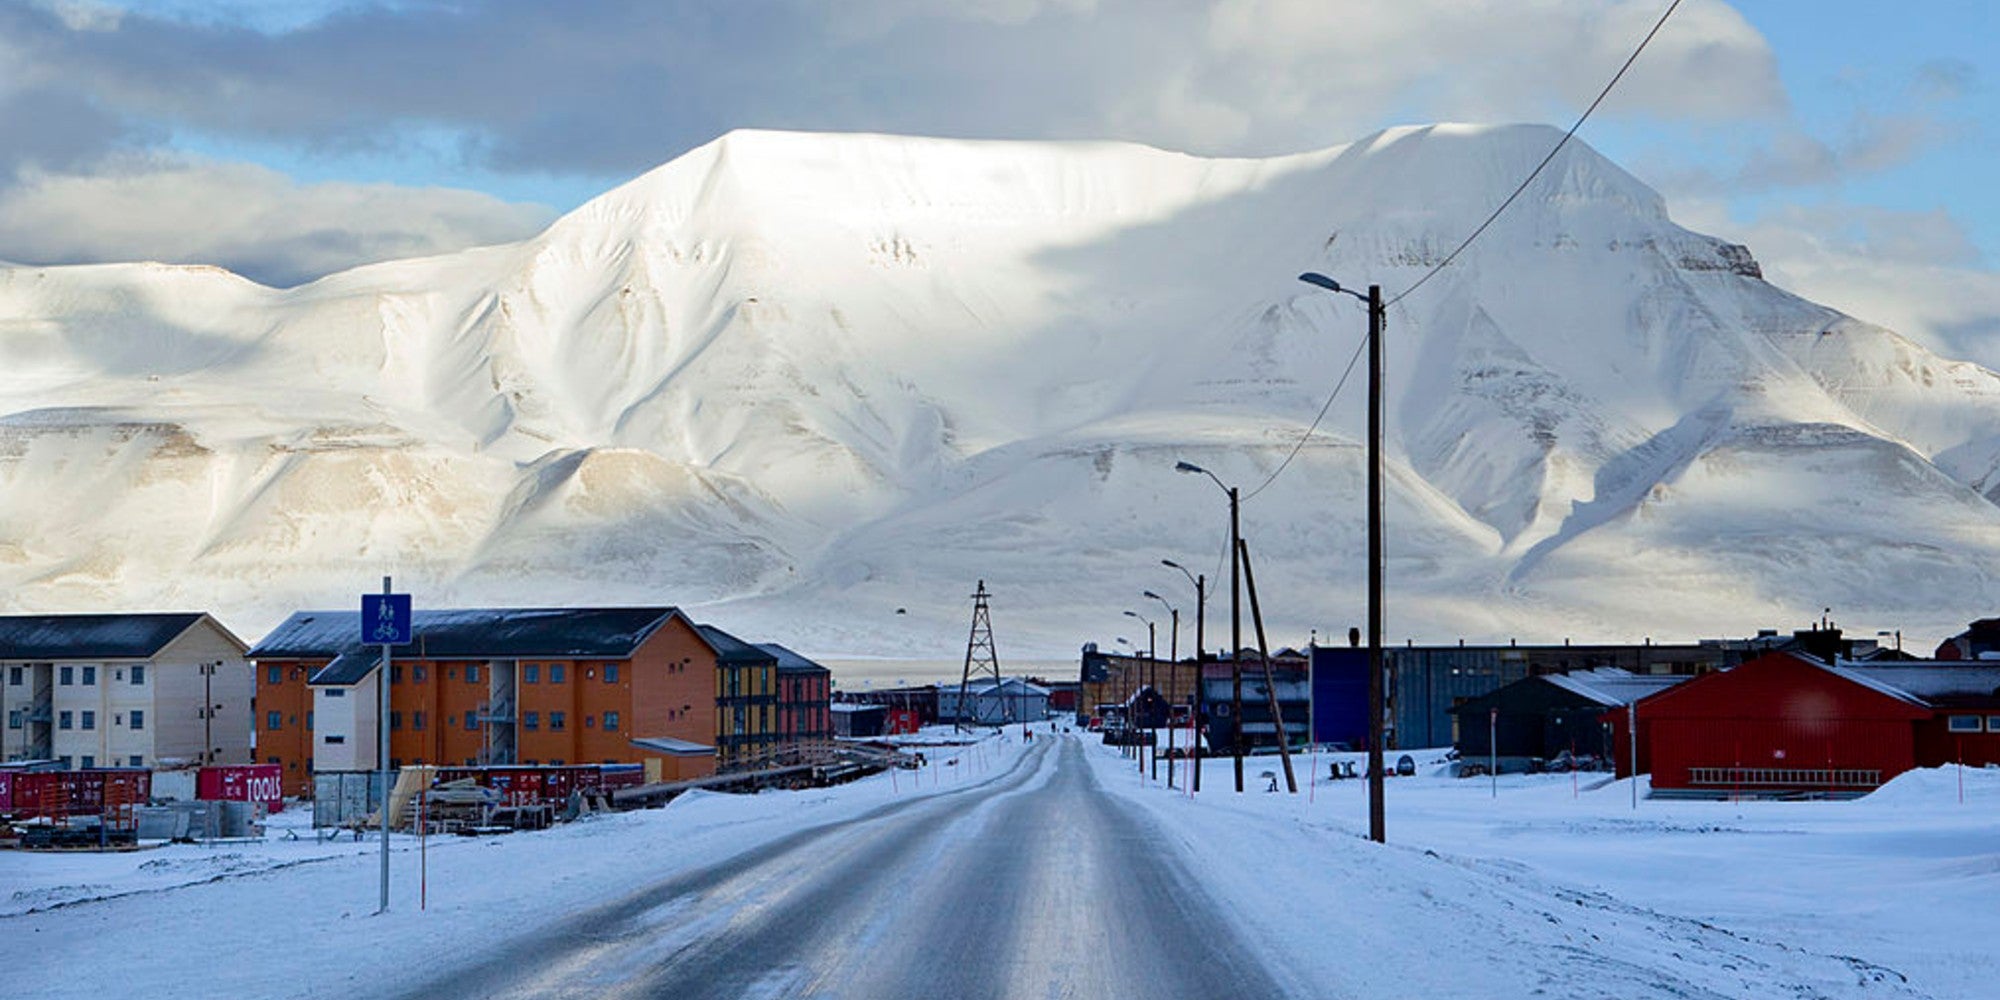 Longyearbyen, Svalbard in the Norwegian Arctic archipelago